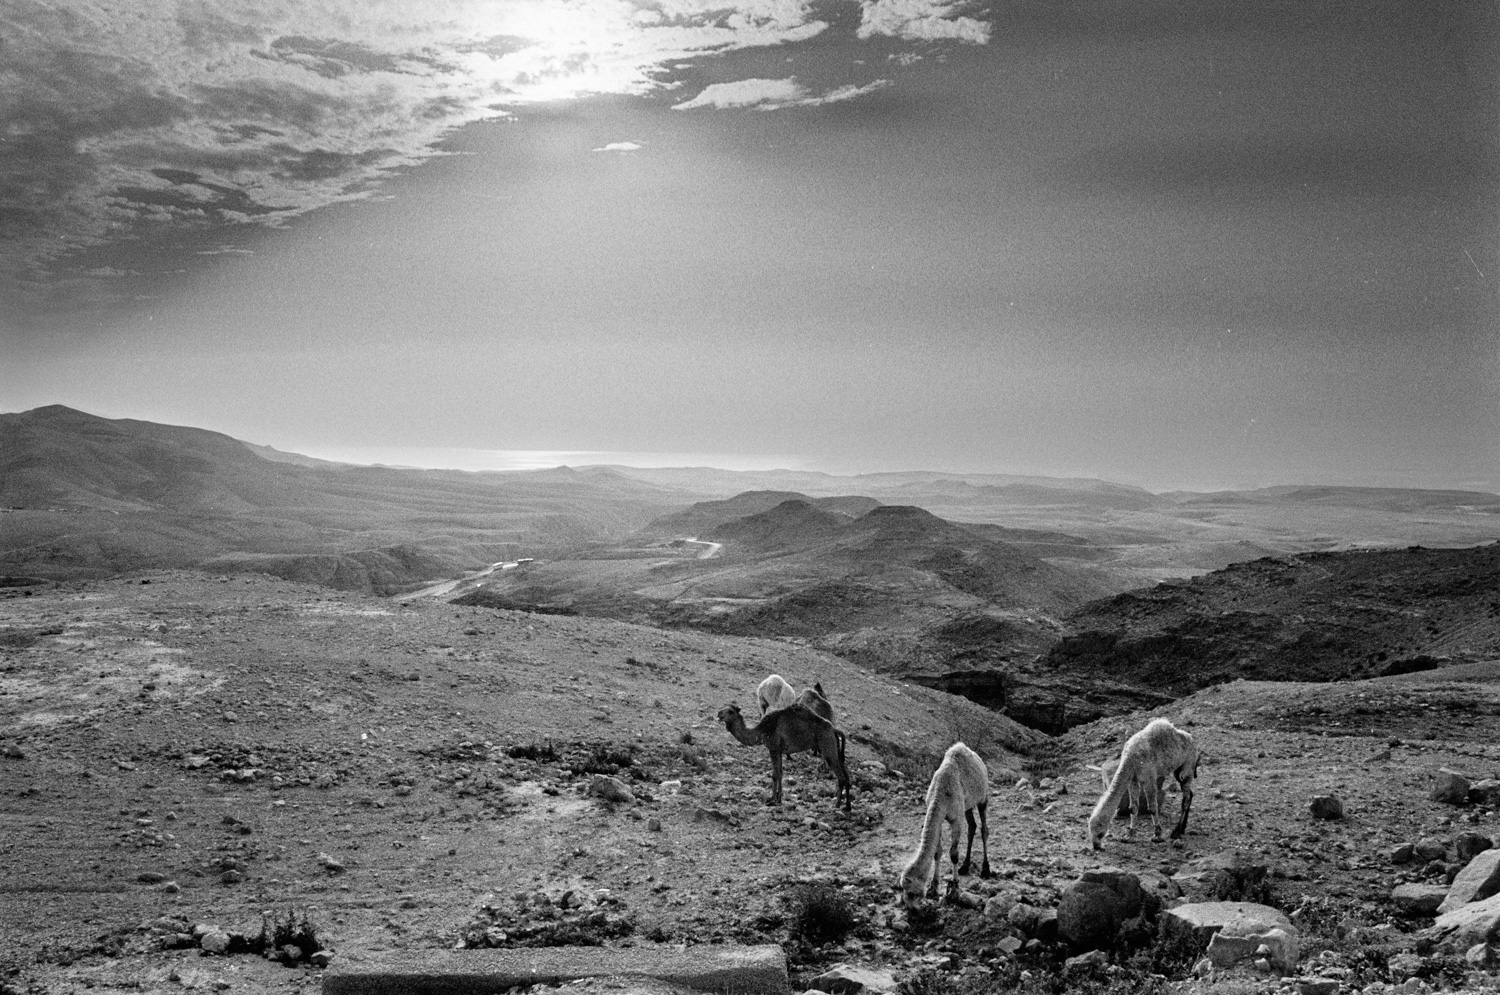 Mount Nebo, Jordan and the Dead Sea